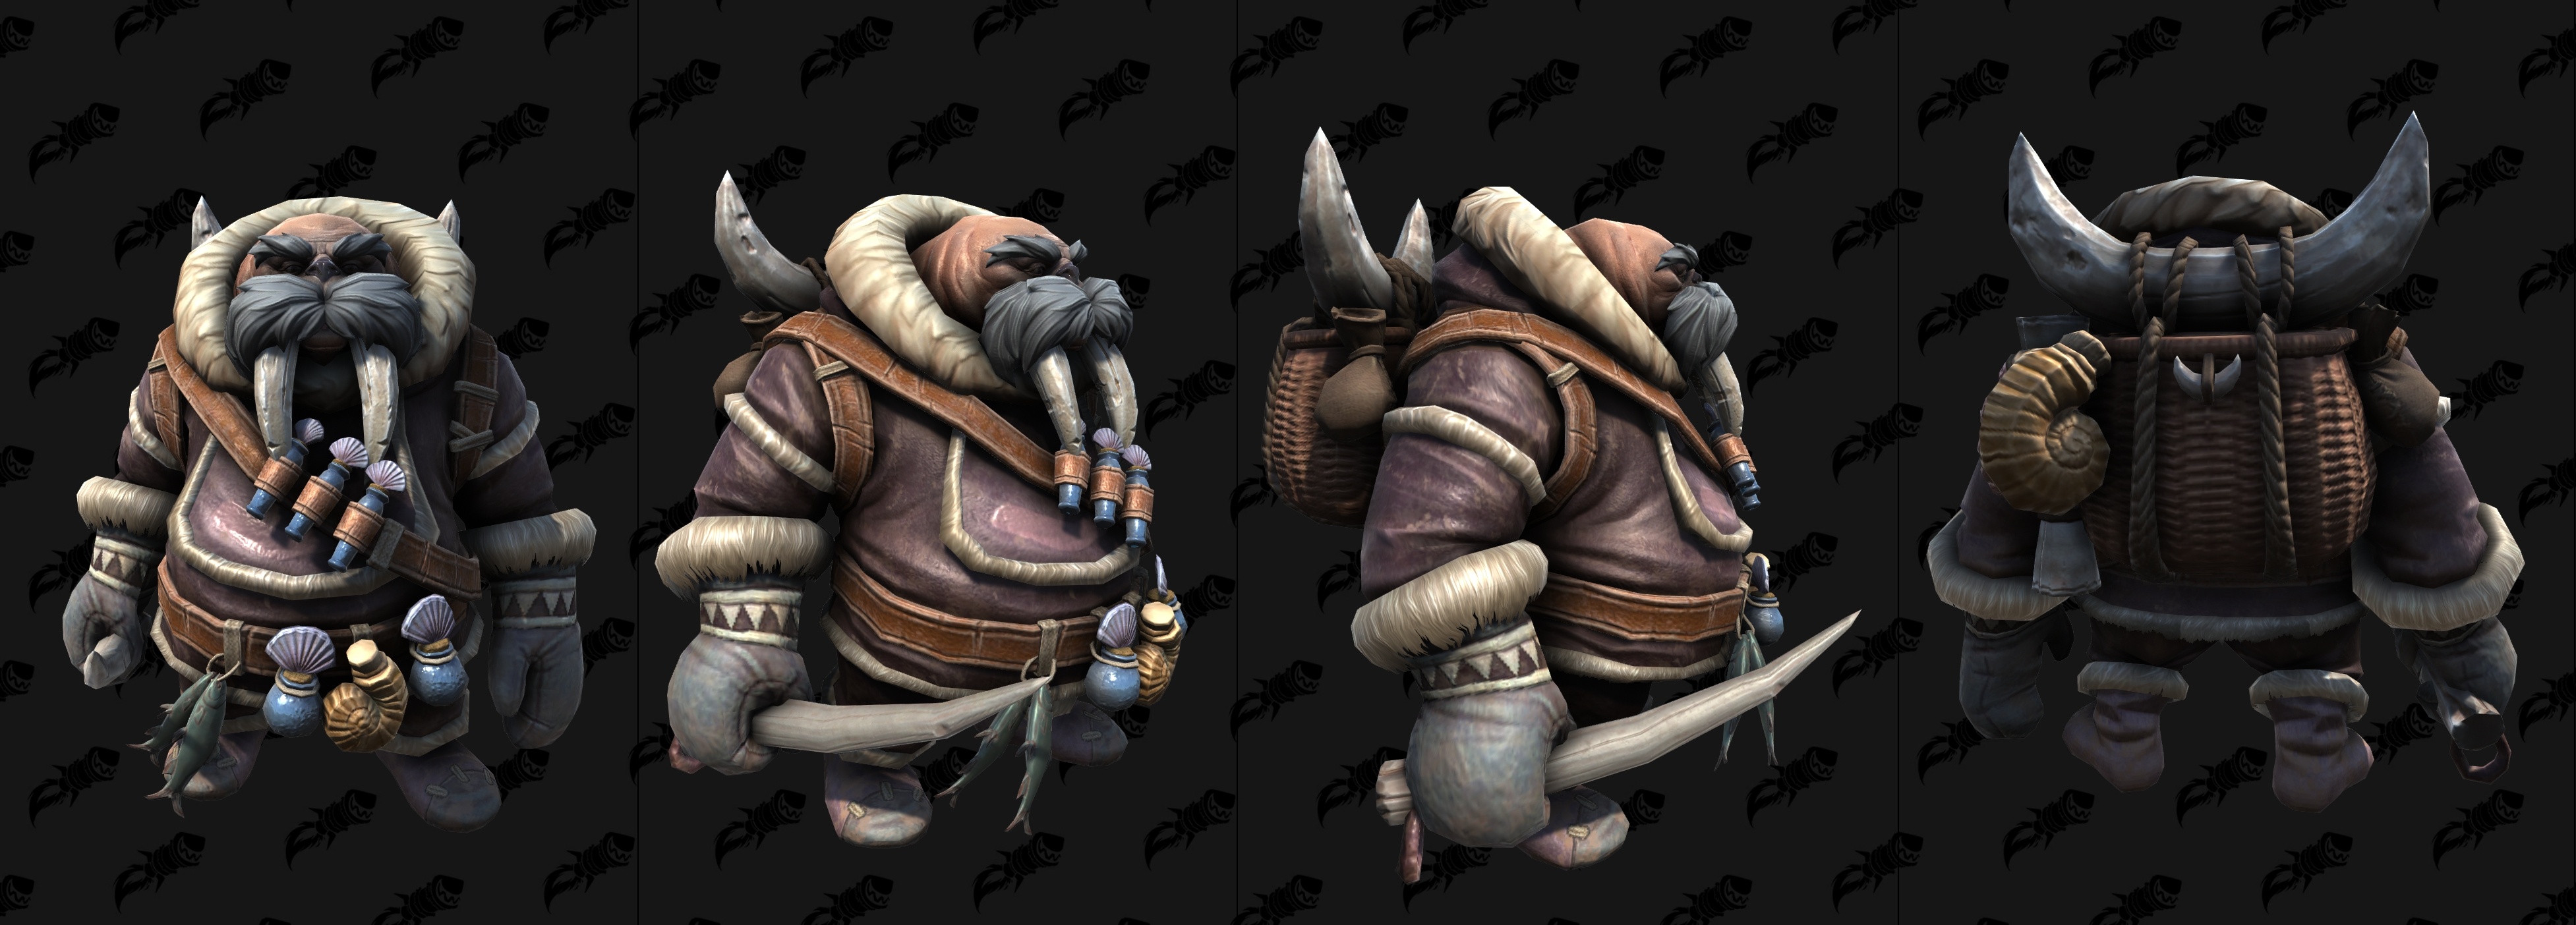 Warcraft III Reforged Alliance Character Models - Muradin Avatar, Dagren  the Orcslayer - Wowhead News